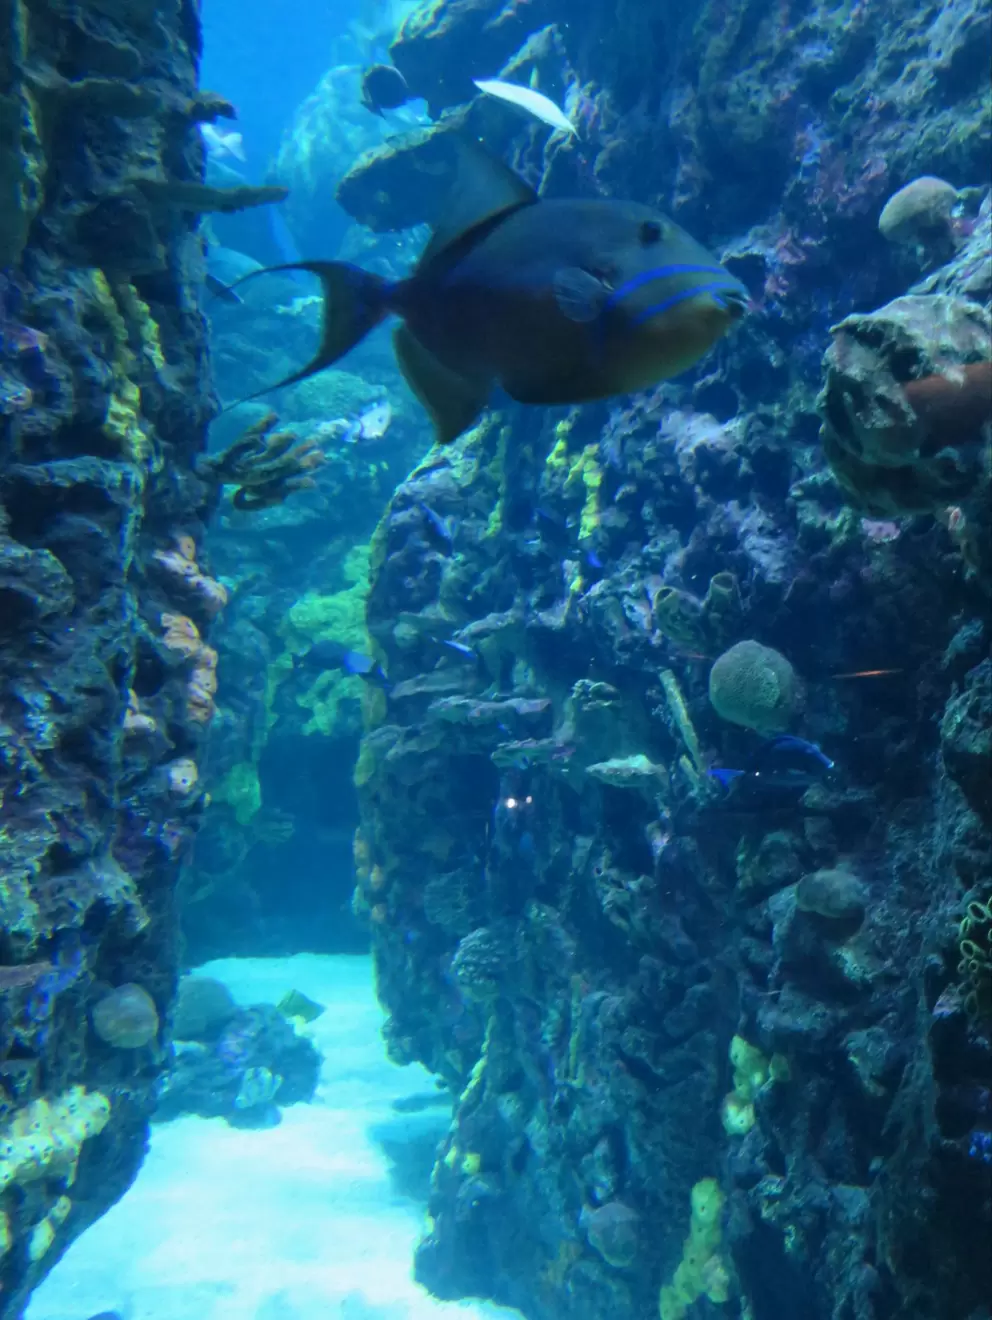 Tennessee Aquarium, Chattanooga